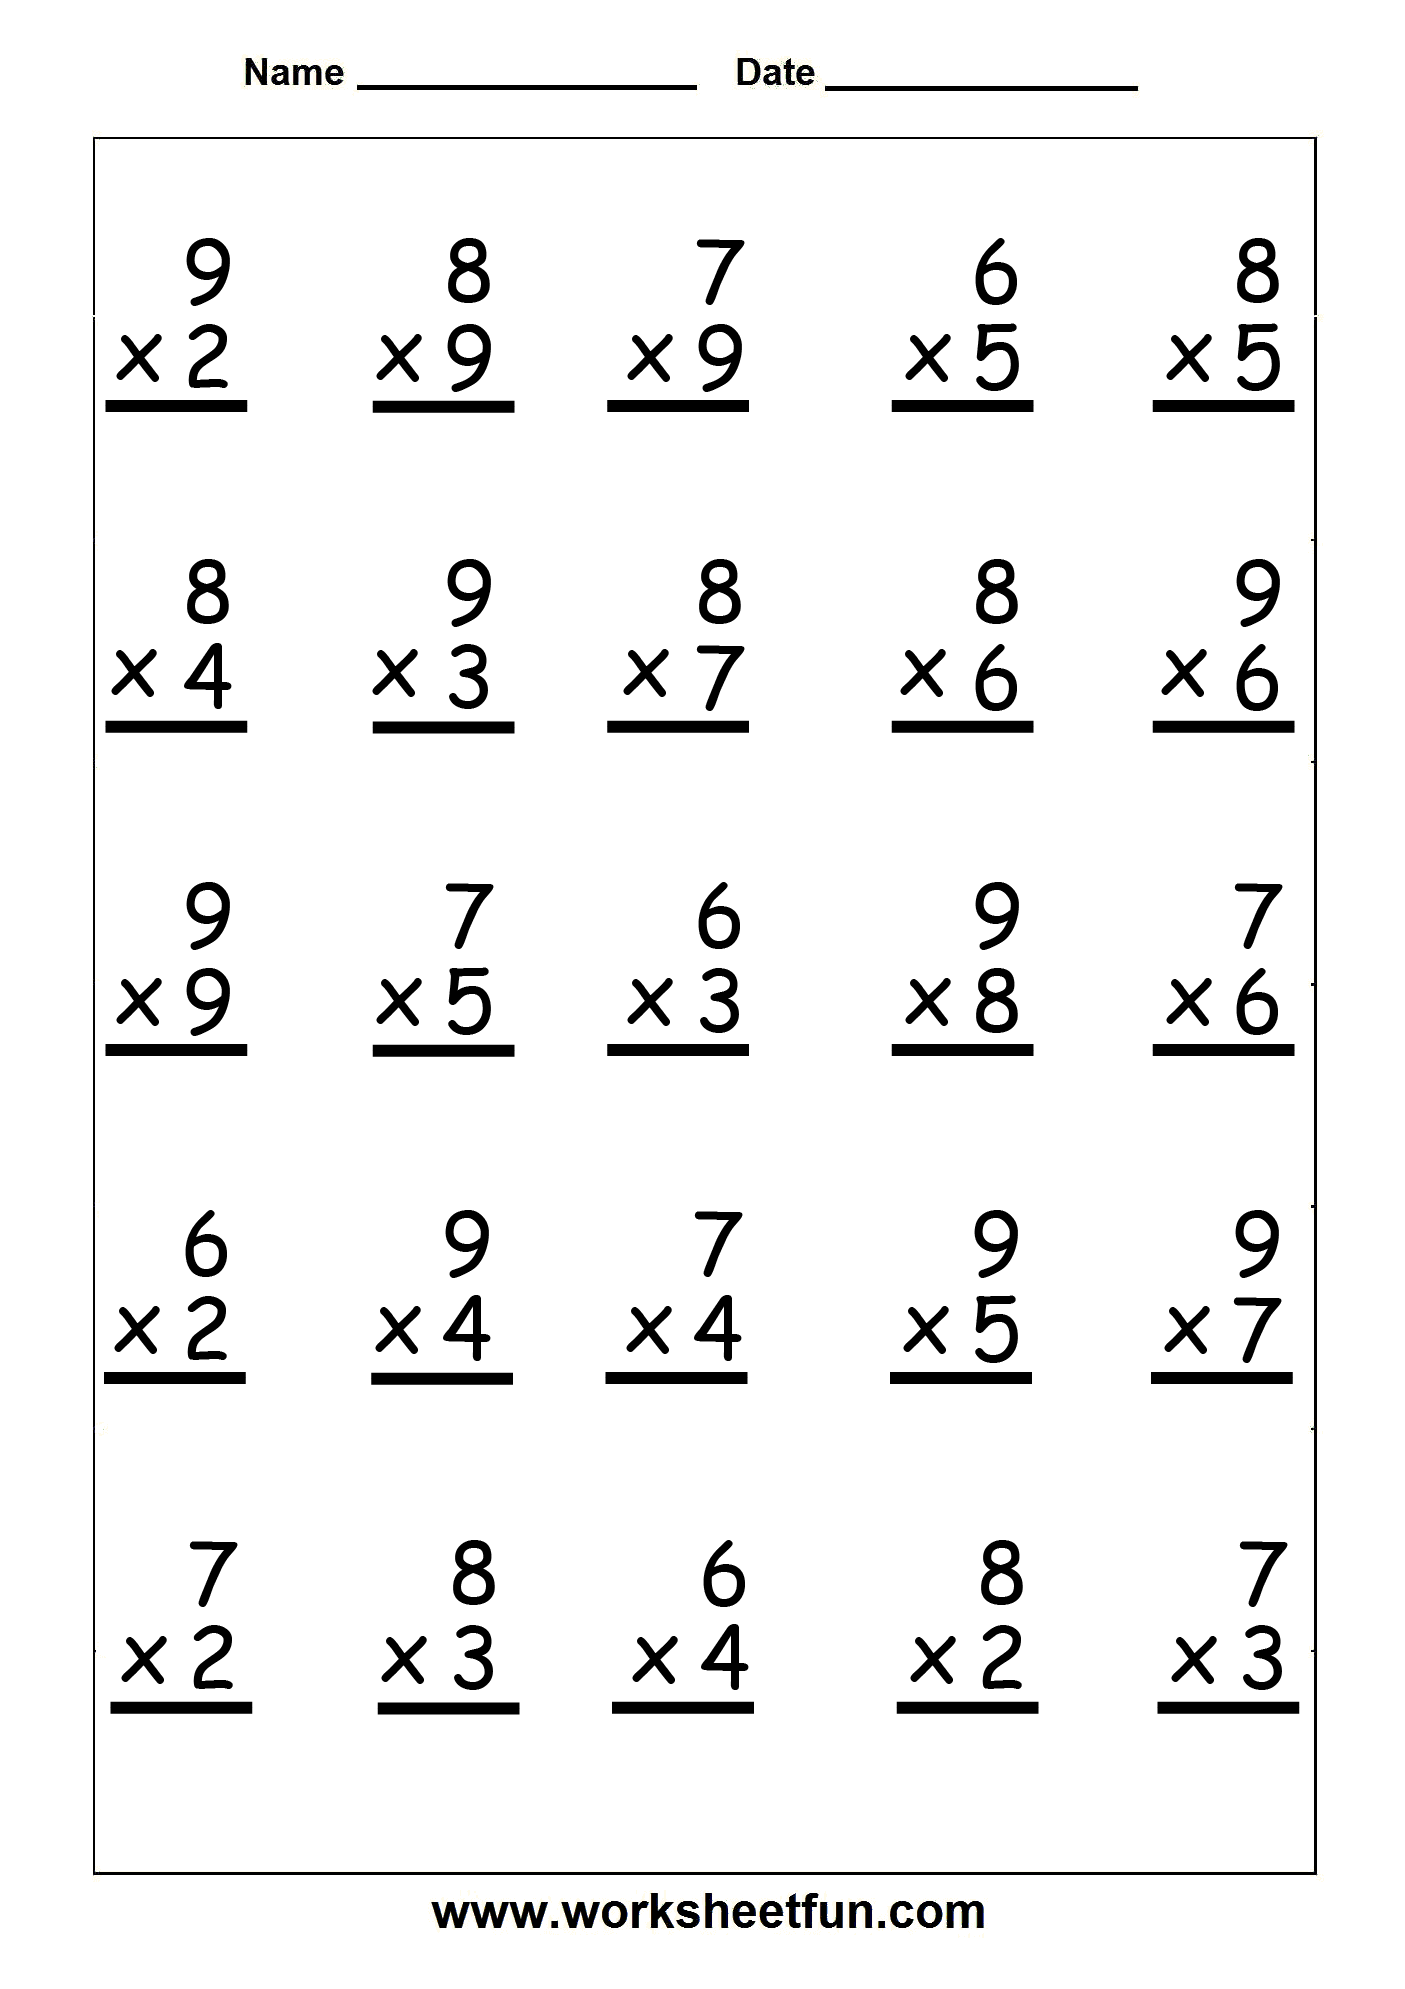 12 Best Images of 12 Times Tables Practice Worksheet - Multiplication